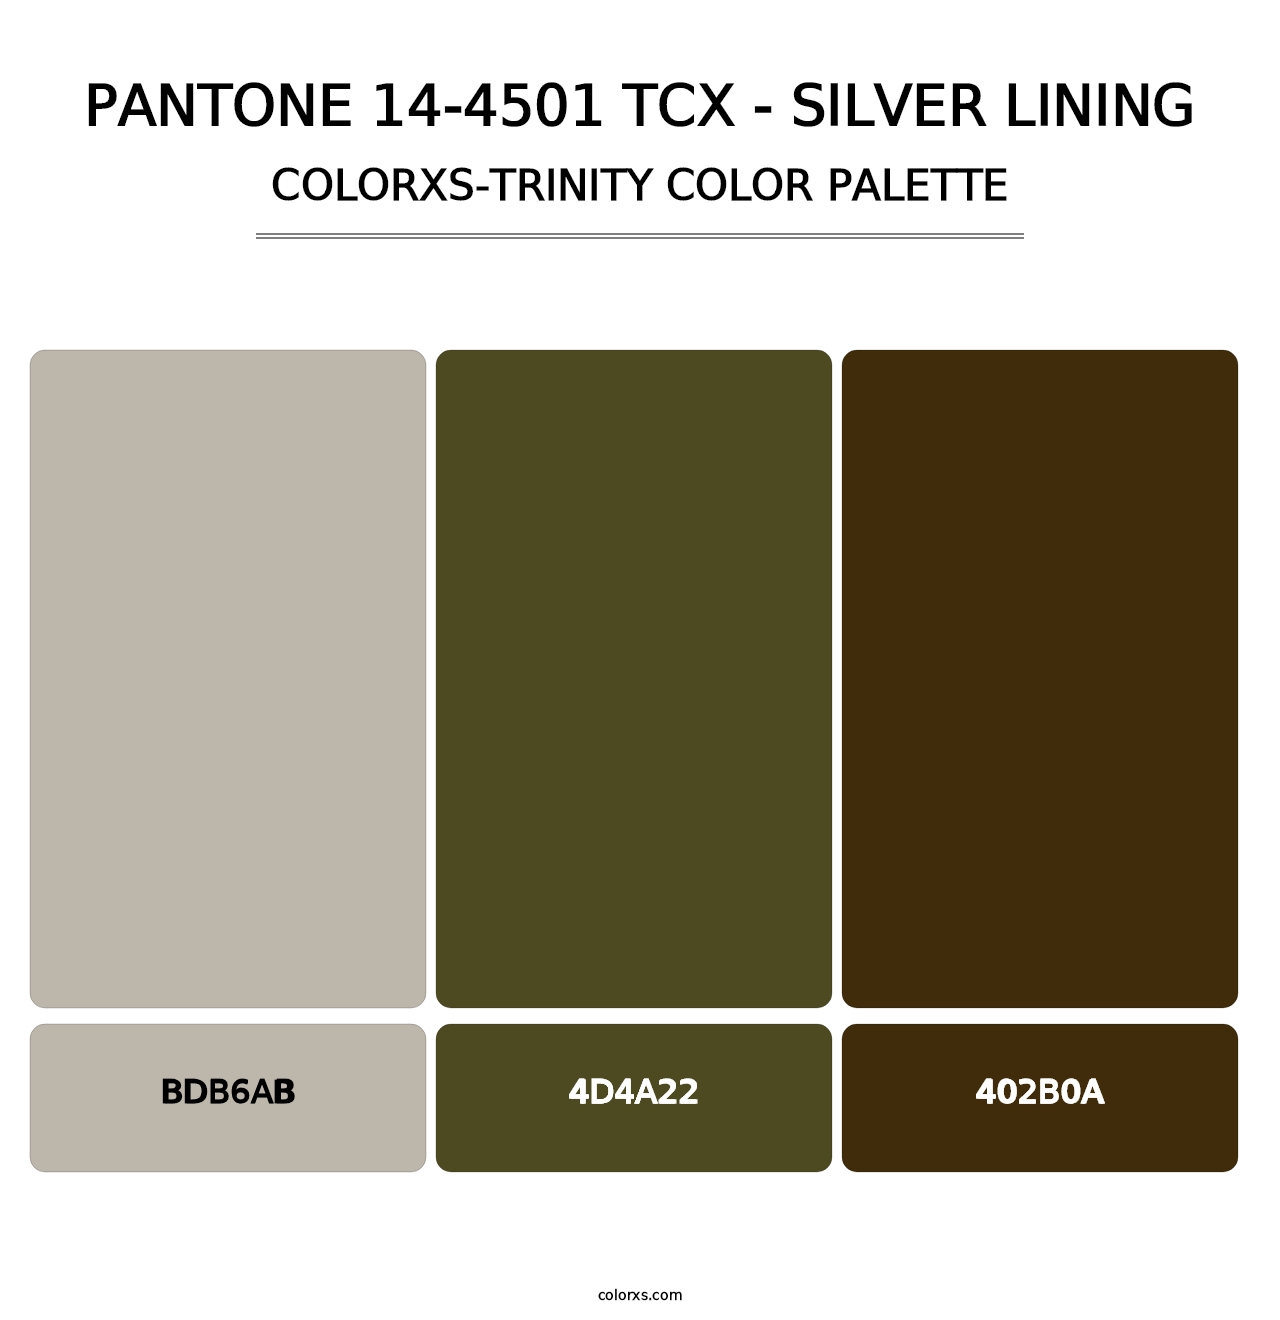 PANTONE 14-4501 TCX - Silver Lining - Colorxs Trinity Palette